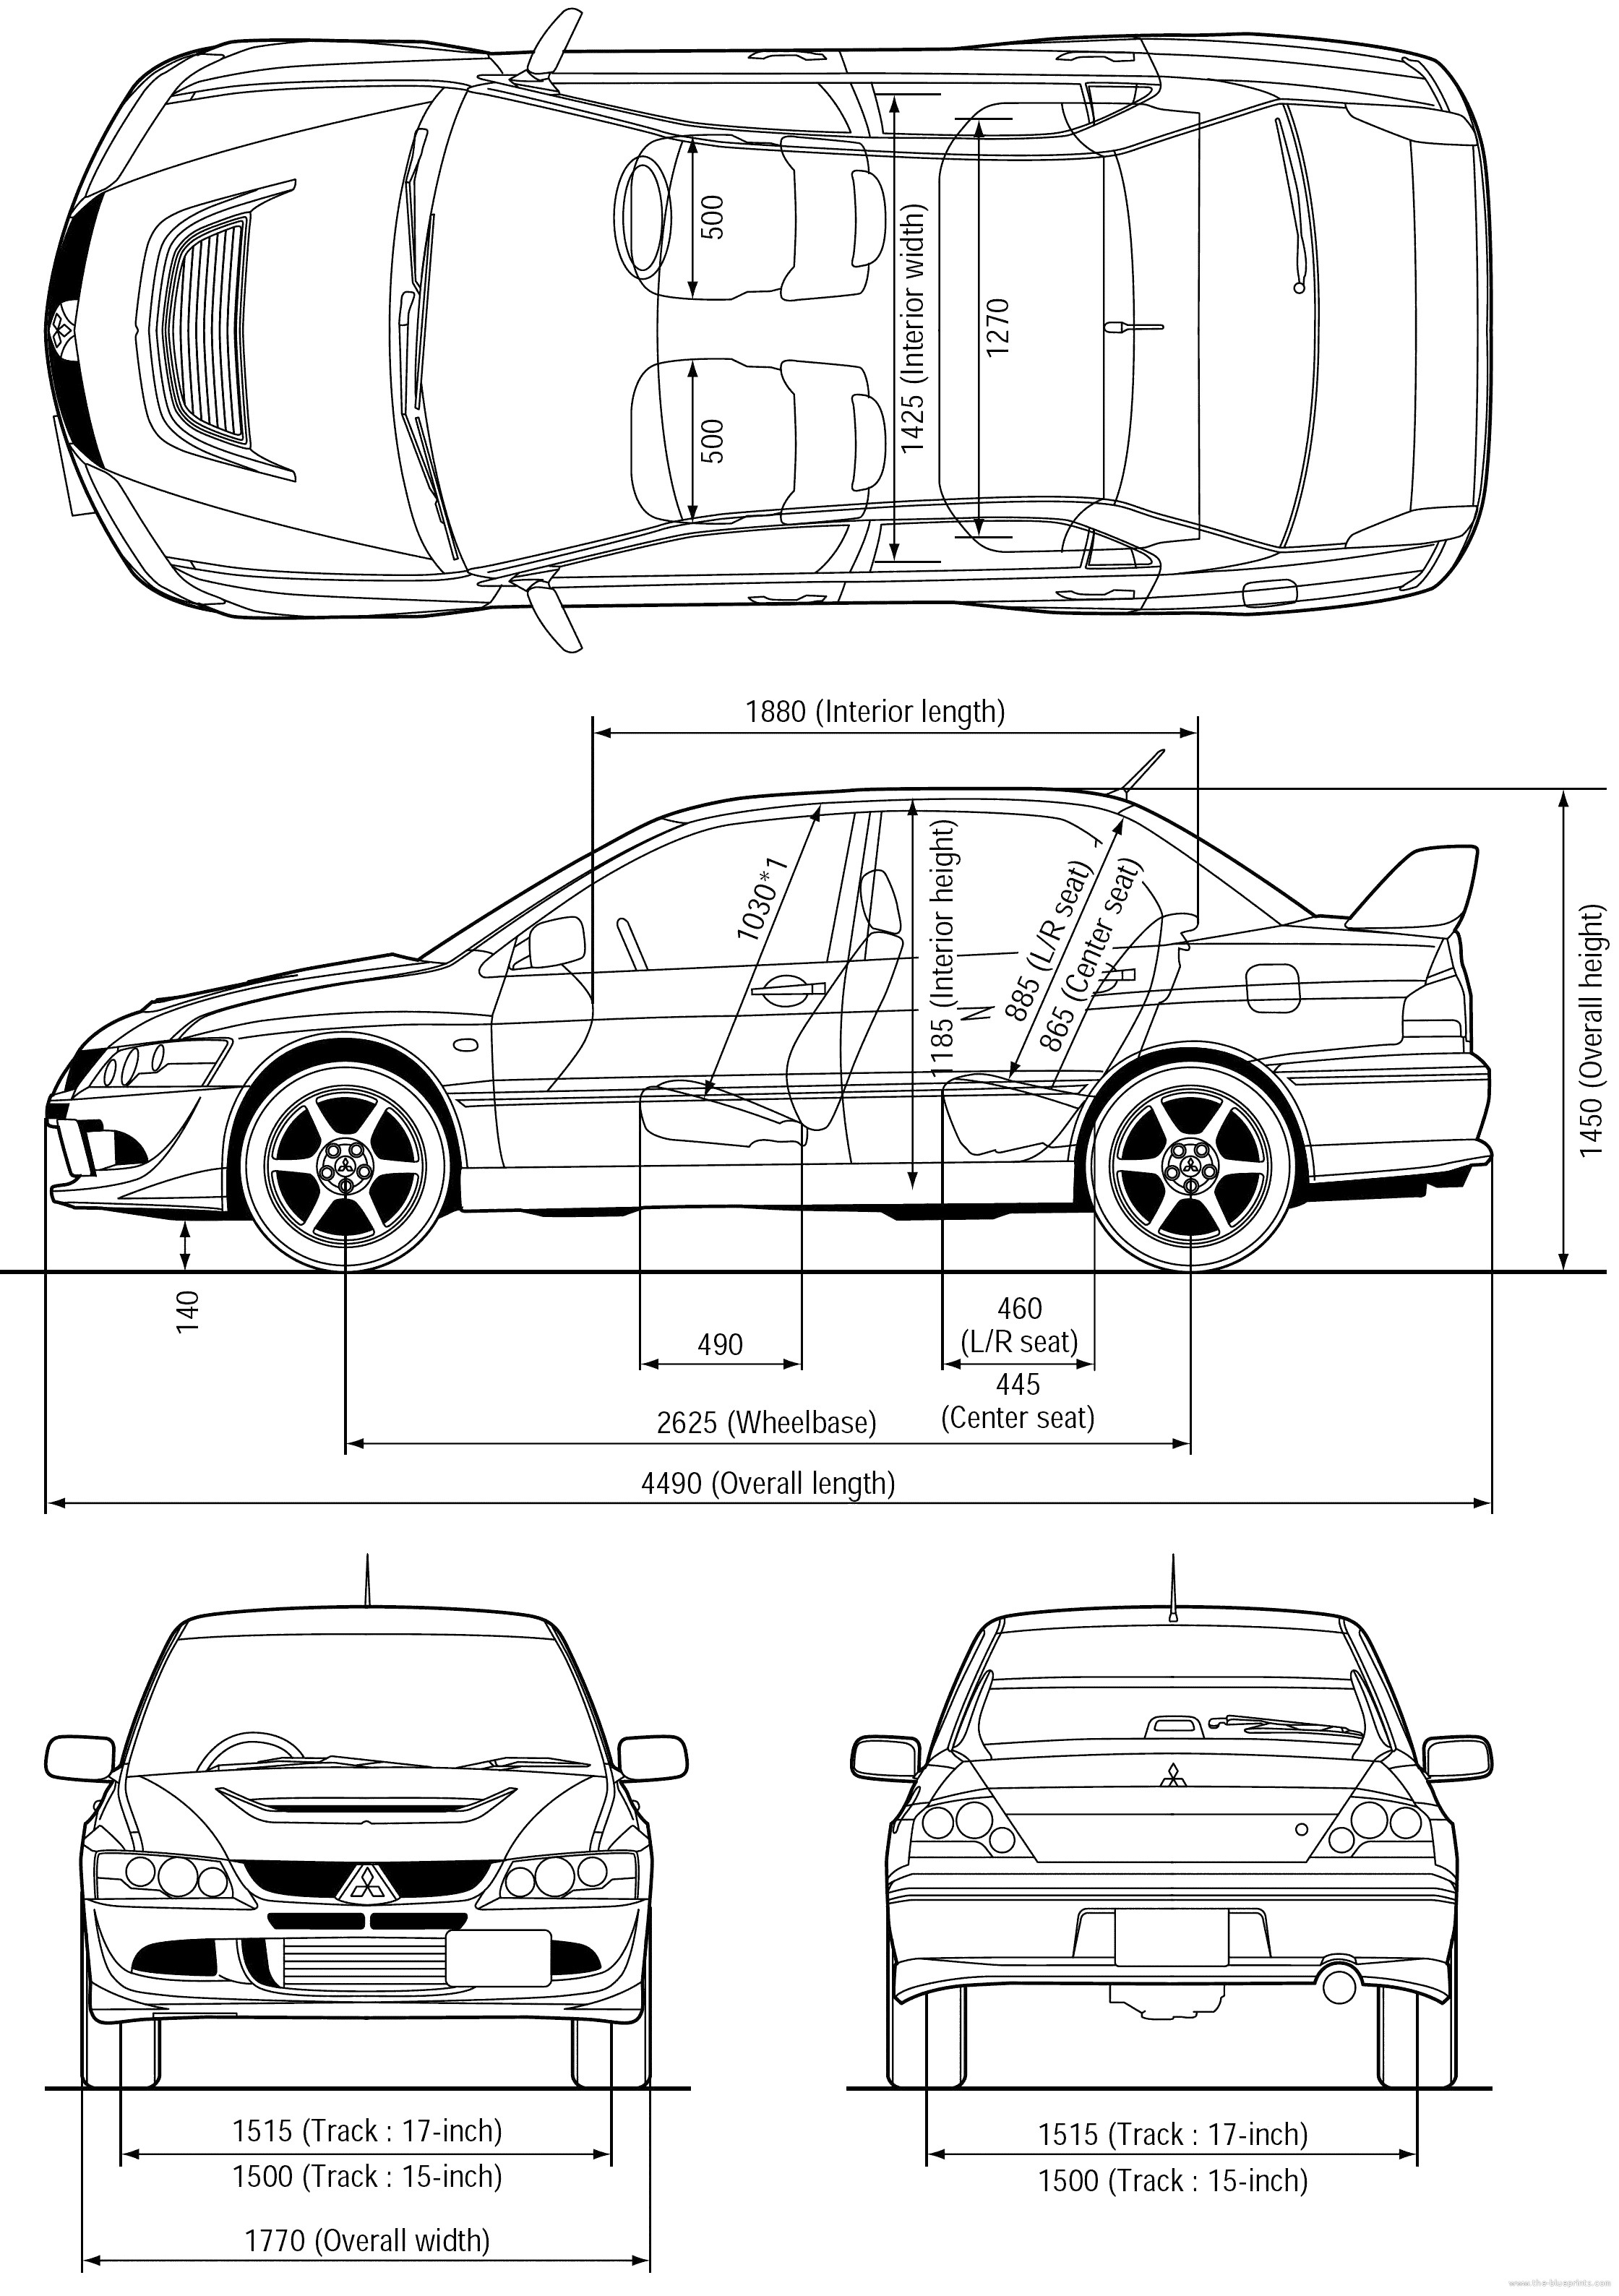 Car Engine Diagram and Explanation Mitsubishi Lancer Evo 8 Cars Pinterest Of Car Engine Diagram and Explanation